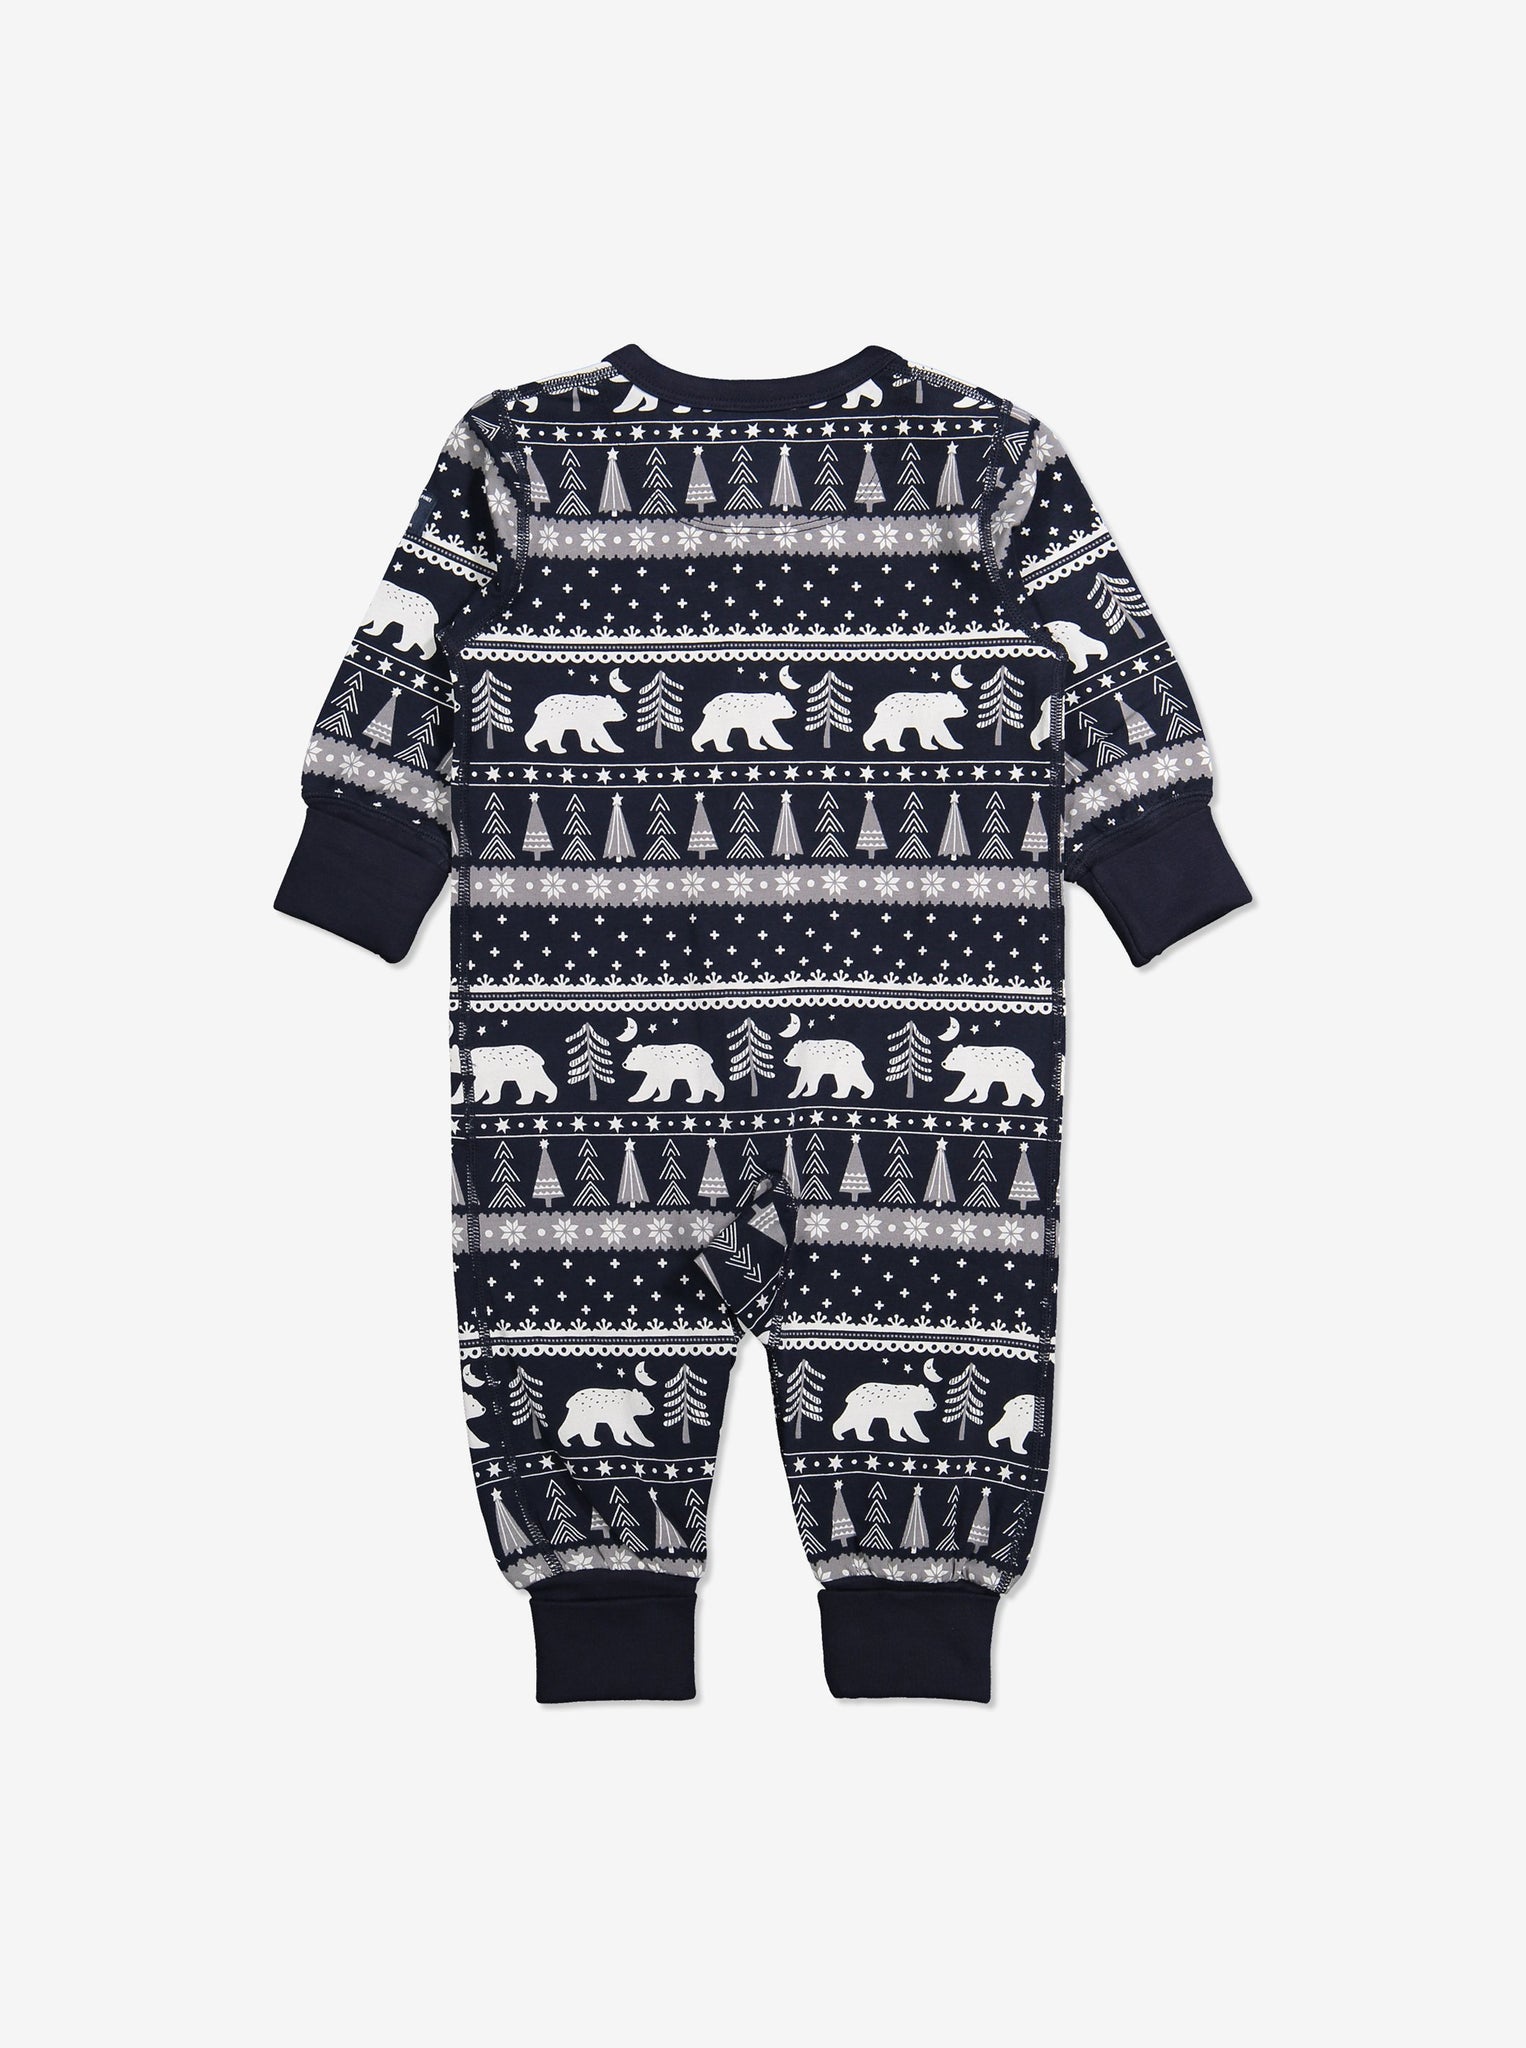 Bear Organic Baby Sleepsuits, Scandinavian Baby Clothes 